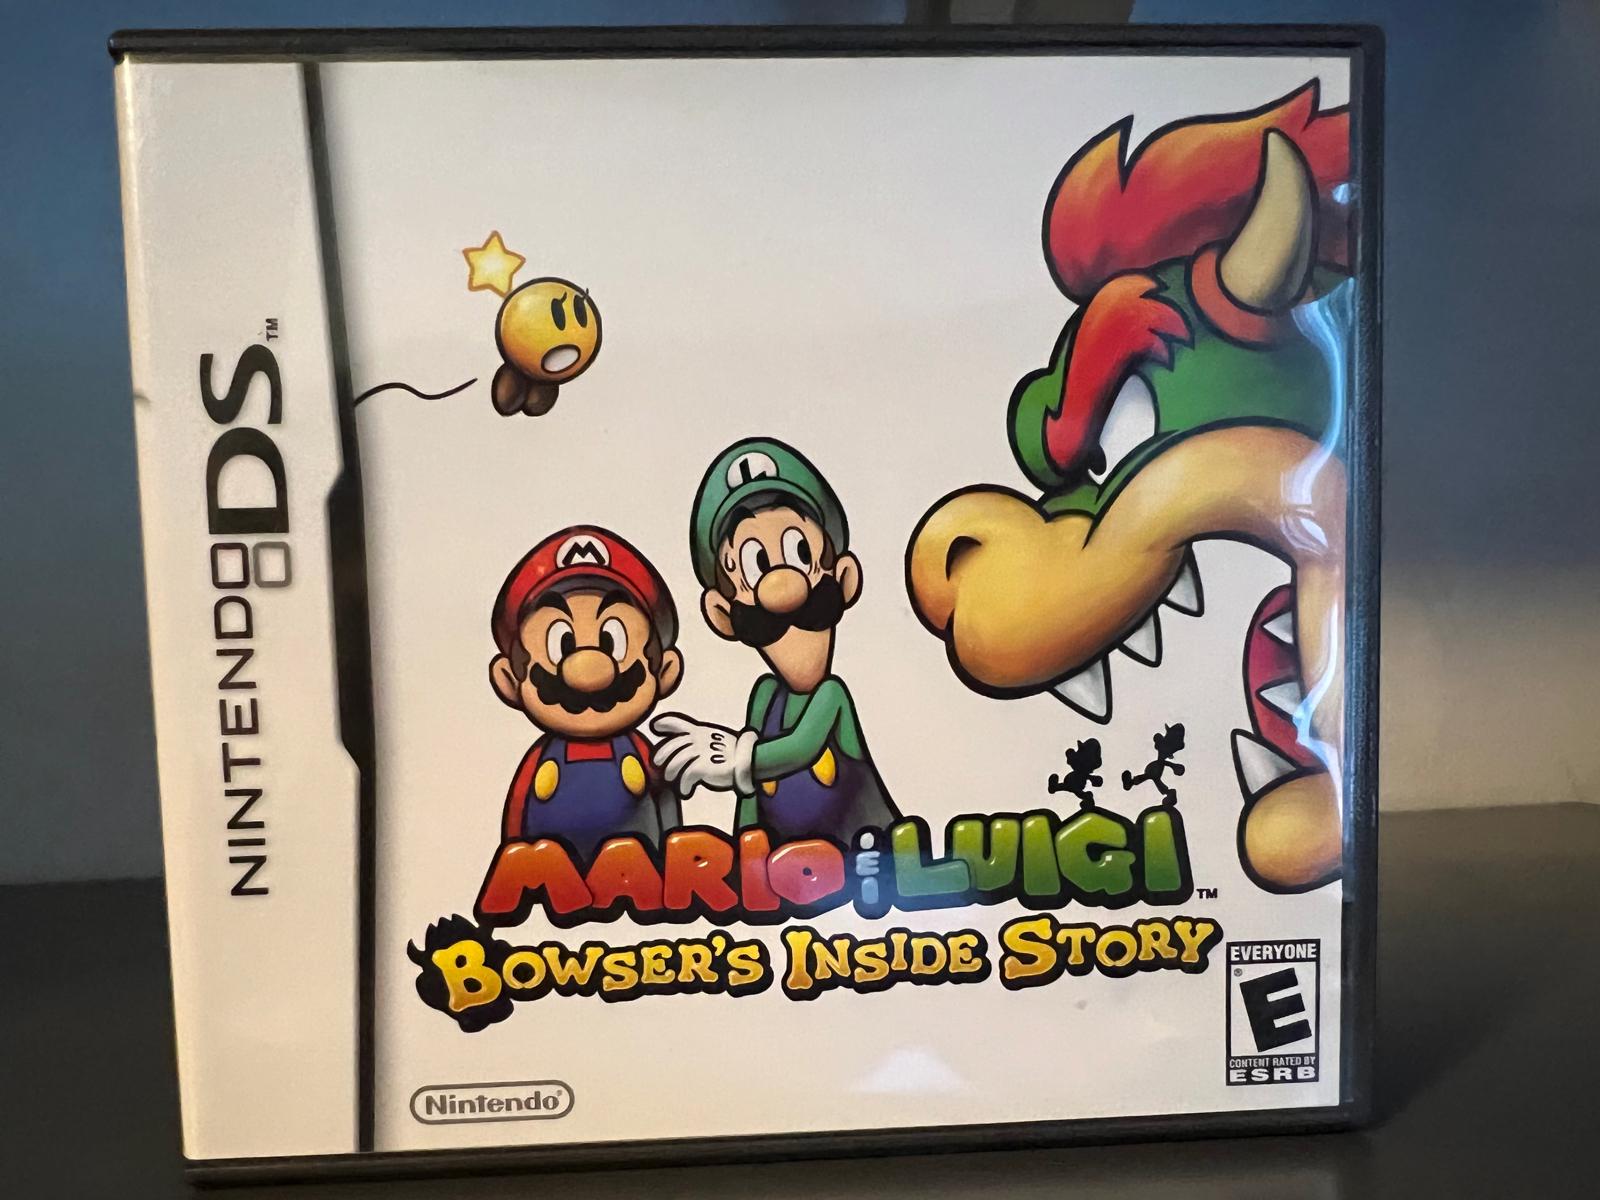 Mario & Luigi: Bowser's Inside Story | Item, Box, and Manual | Nintendo DS